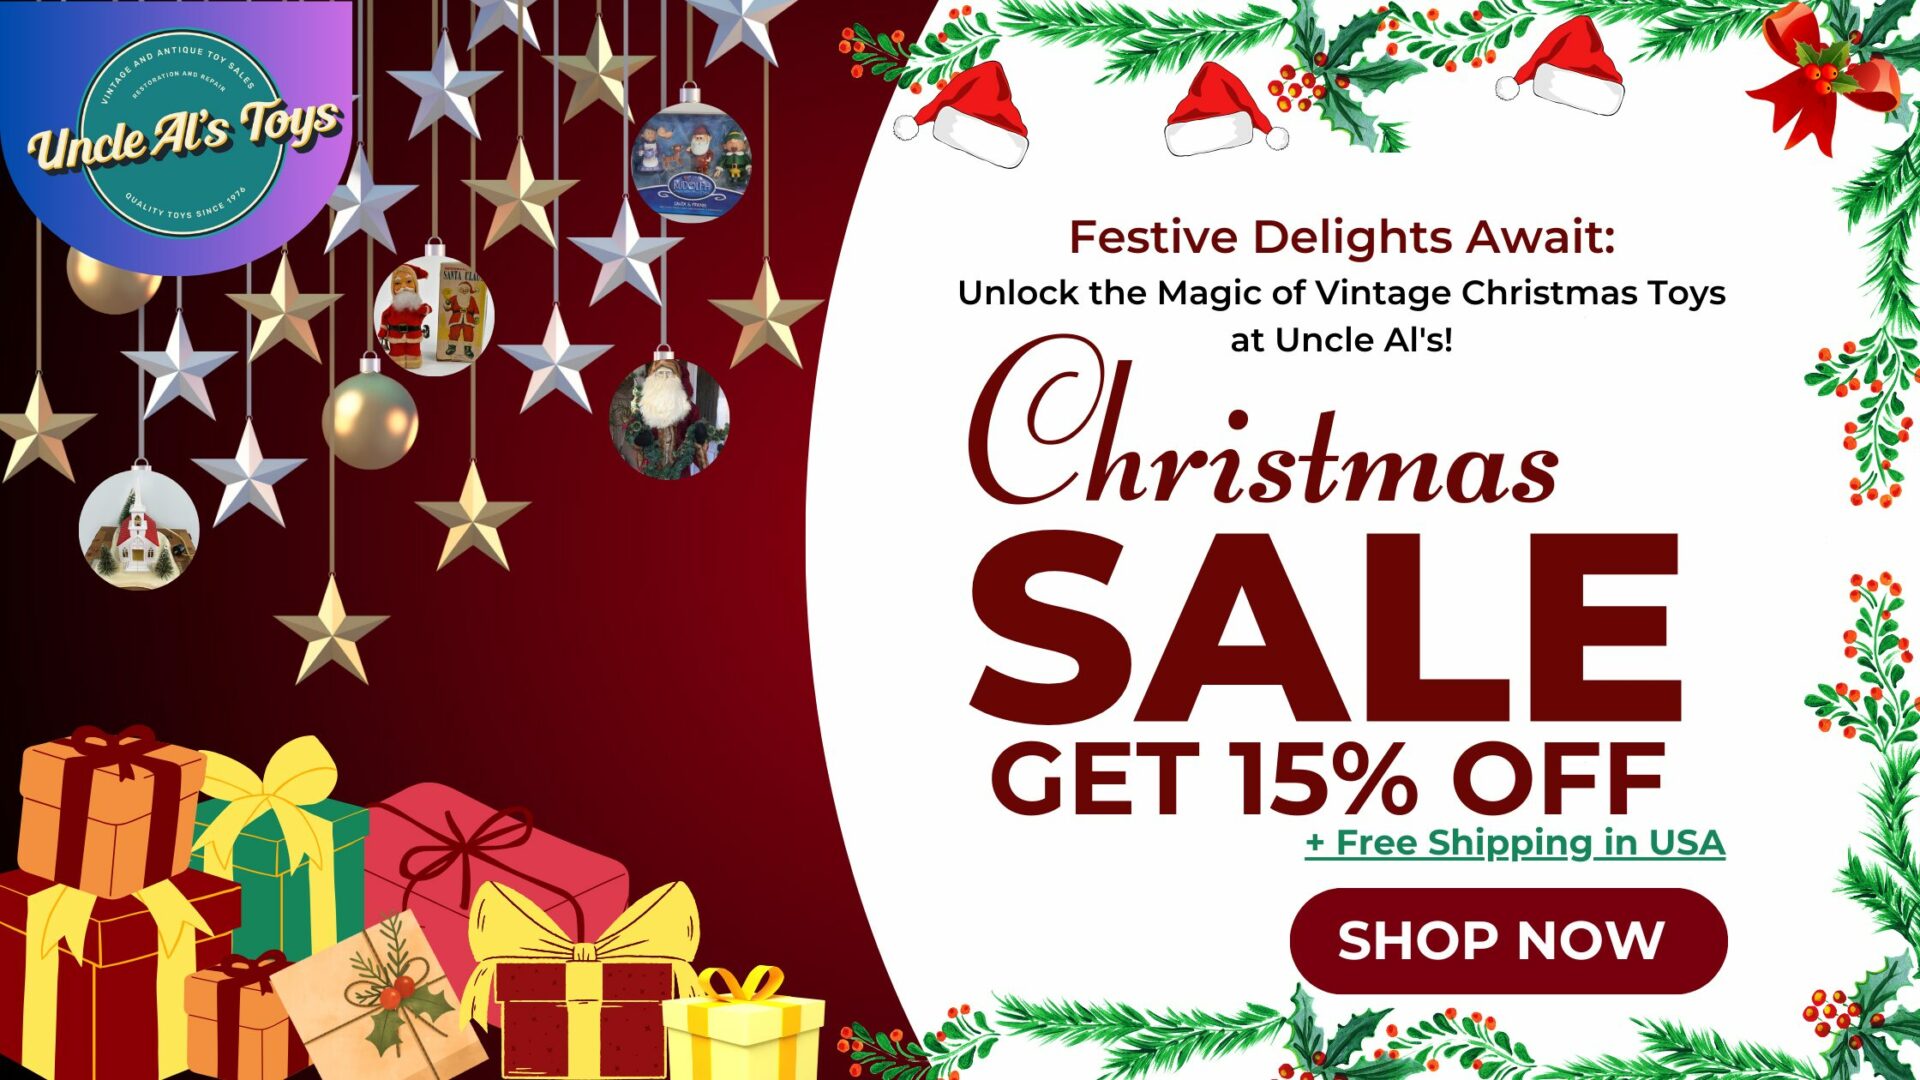 Festive Delights Await - Unlock the Magic of Vintage Christmas Toys - Uncle Al's Toys